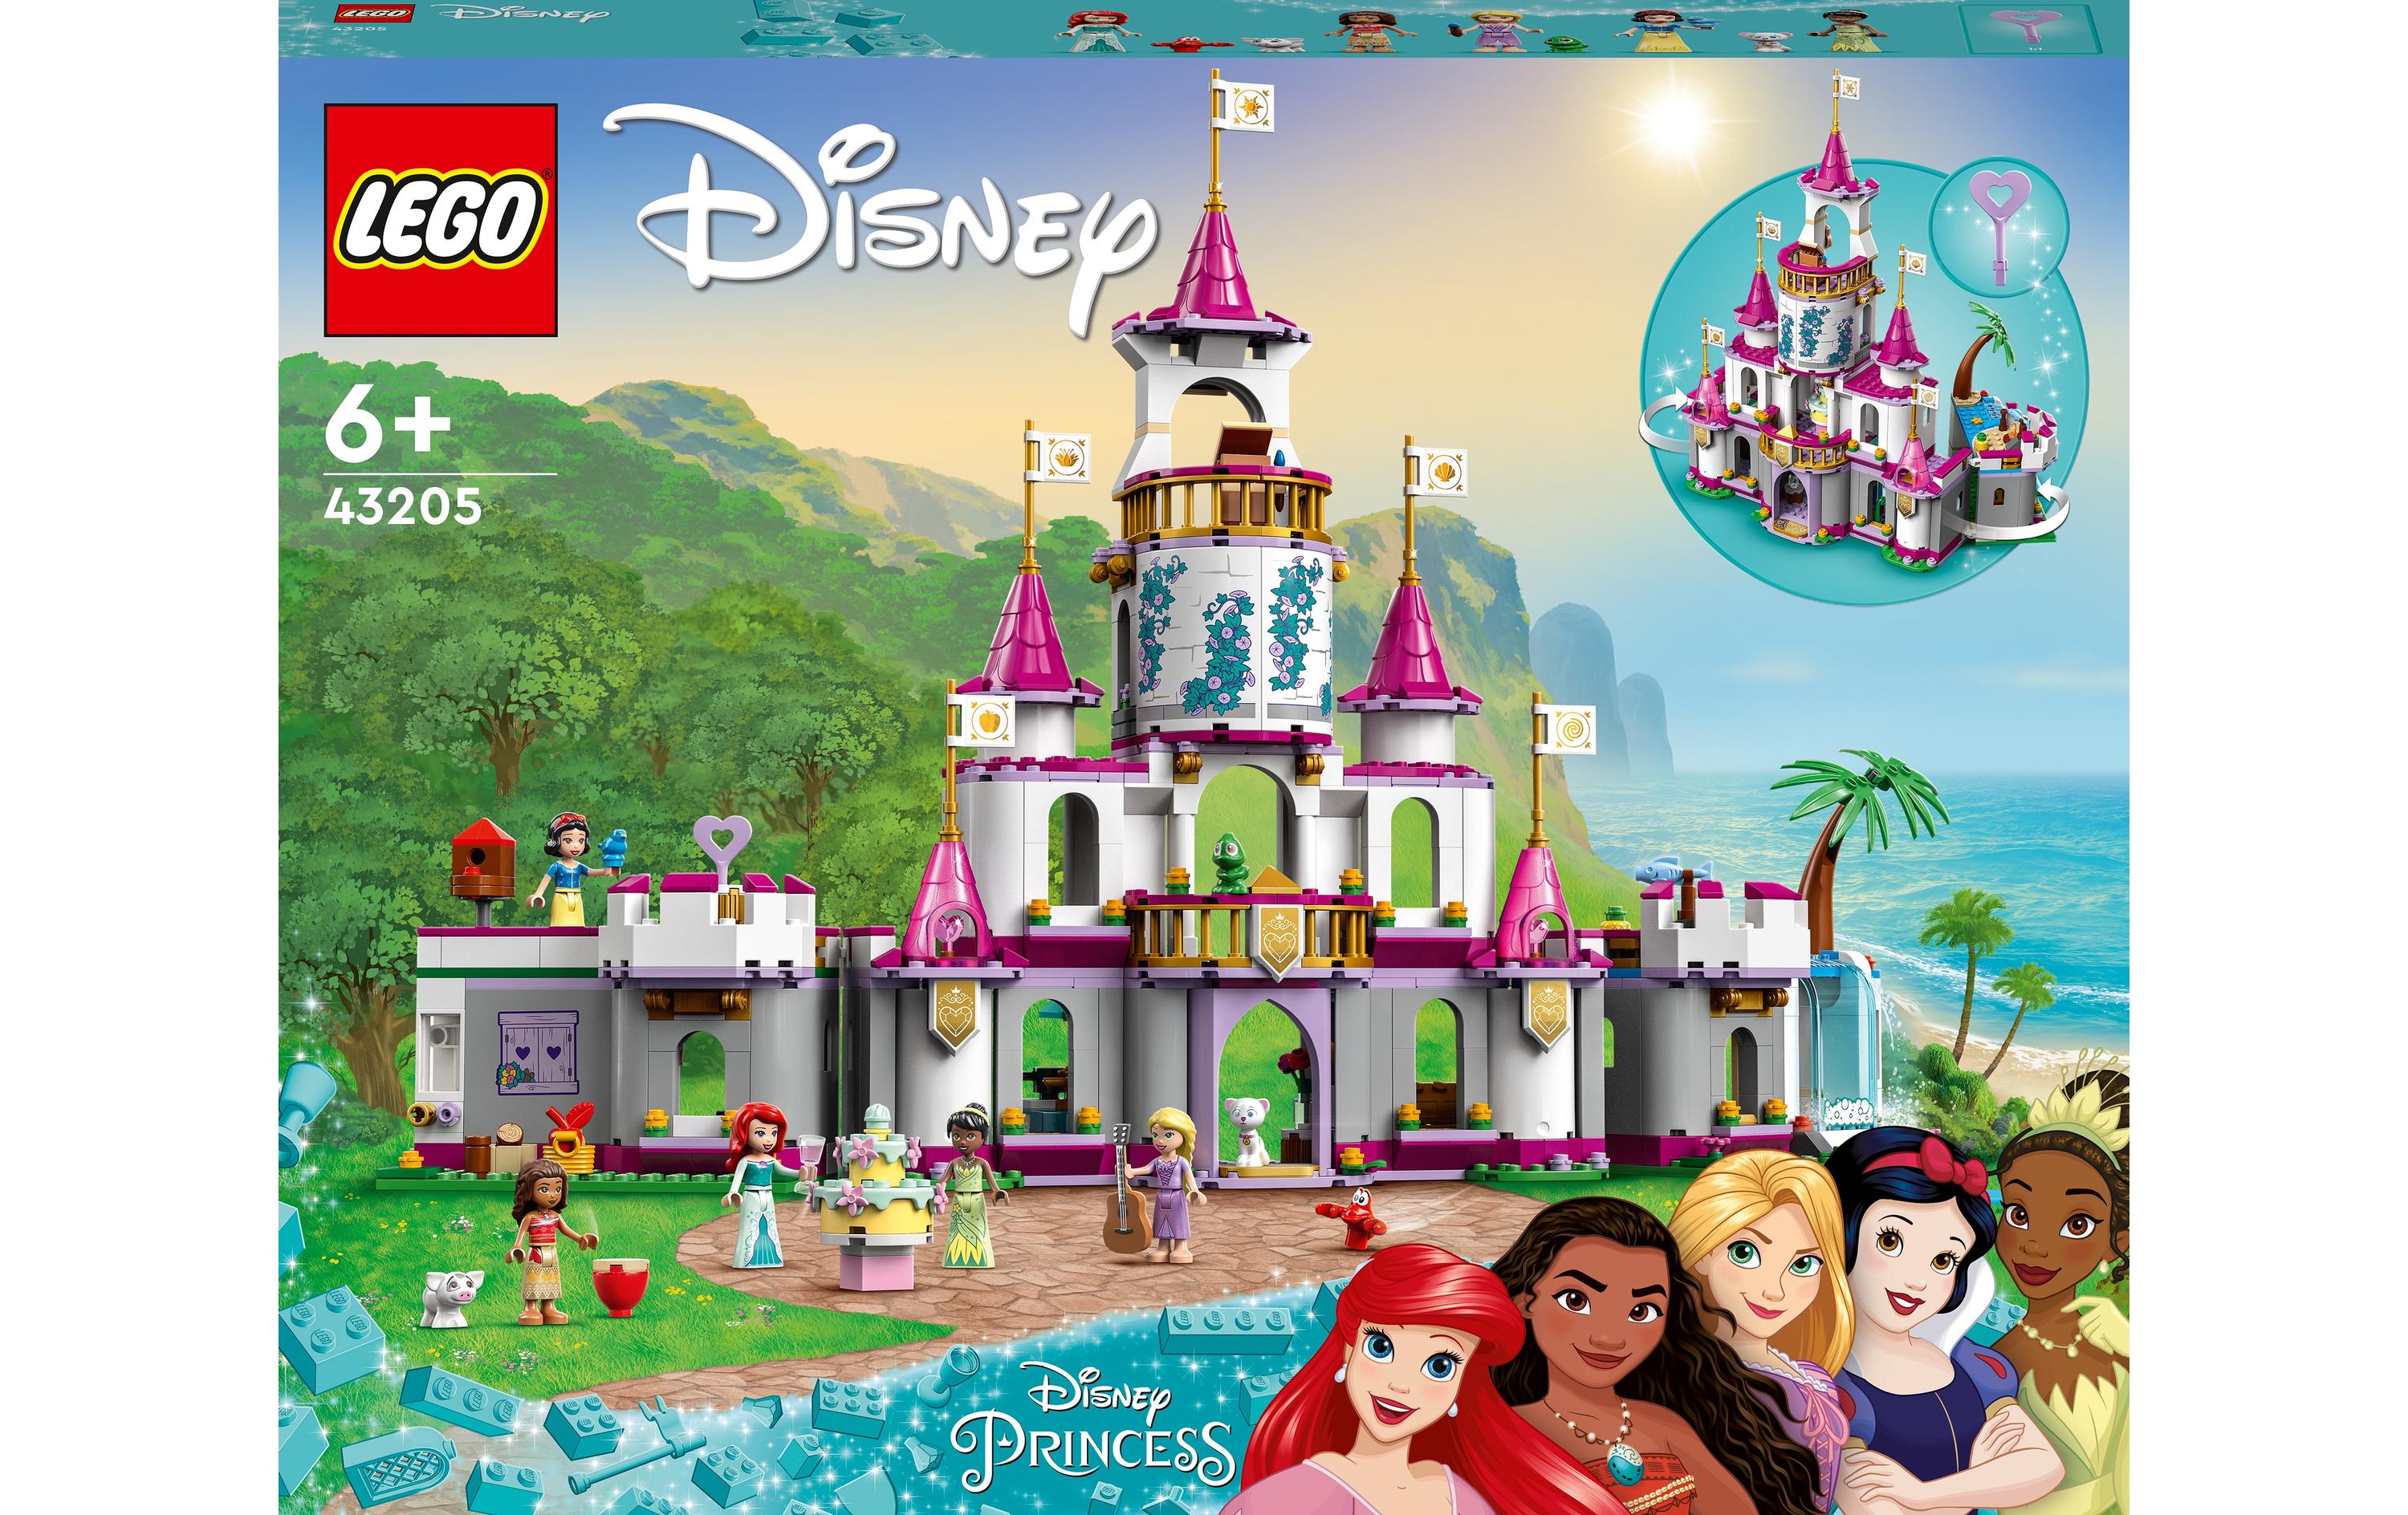 LEGO® Disney Princess Ultimatives Abenteuerschloss 43205 - im GOLDSTIEN.SHOP verfügbar mit Gratisversand ab Schweizer Lager! (5702017154329)